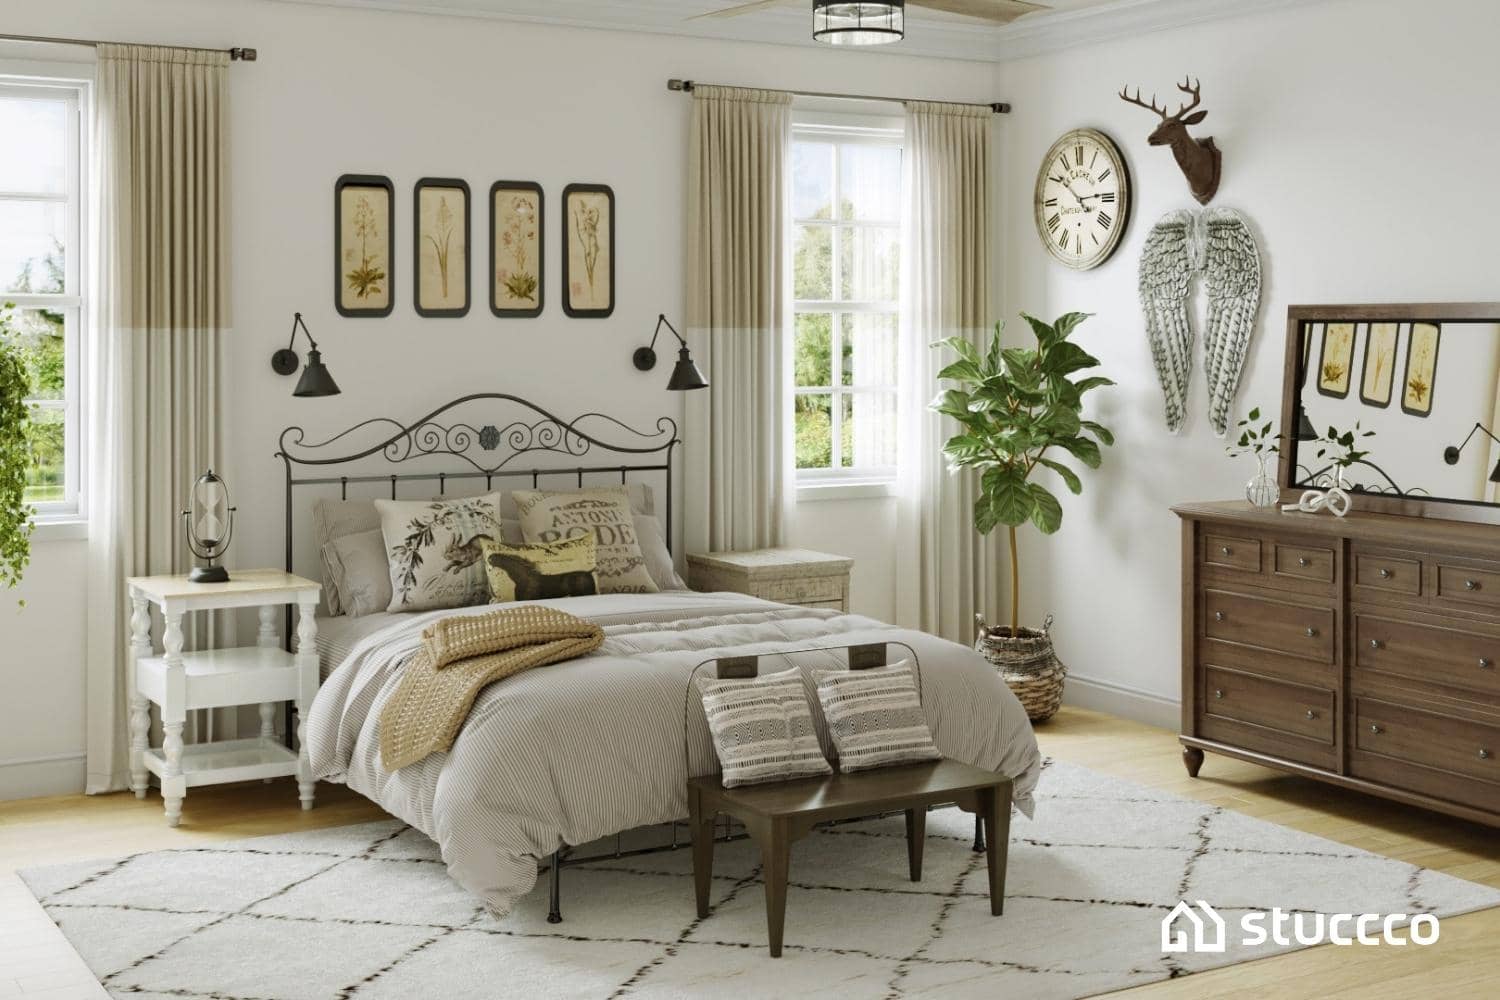 Stuccco online interior design, traditional bedroom example